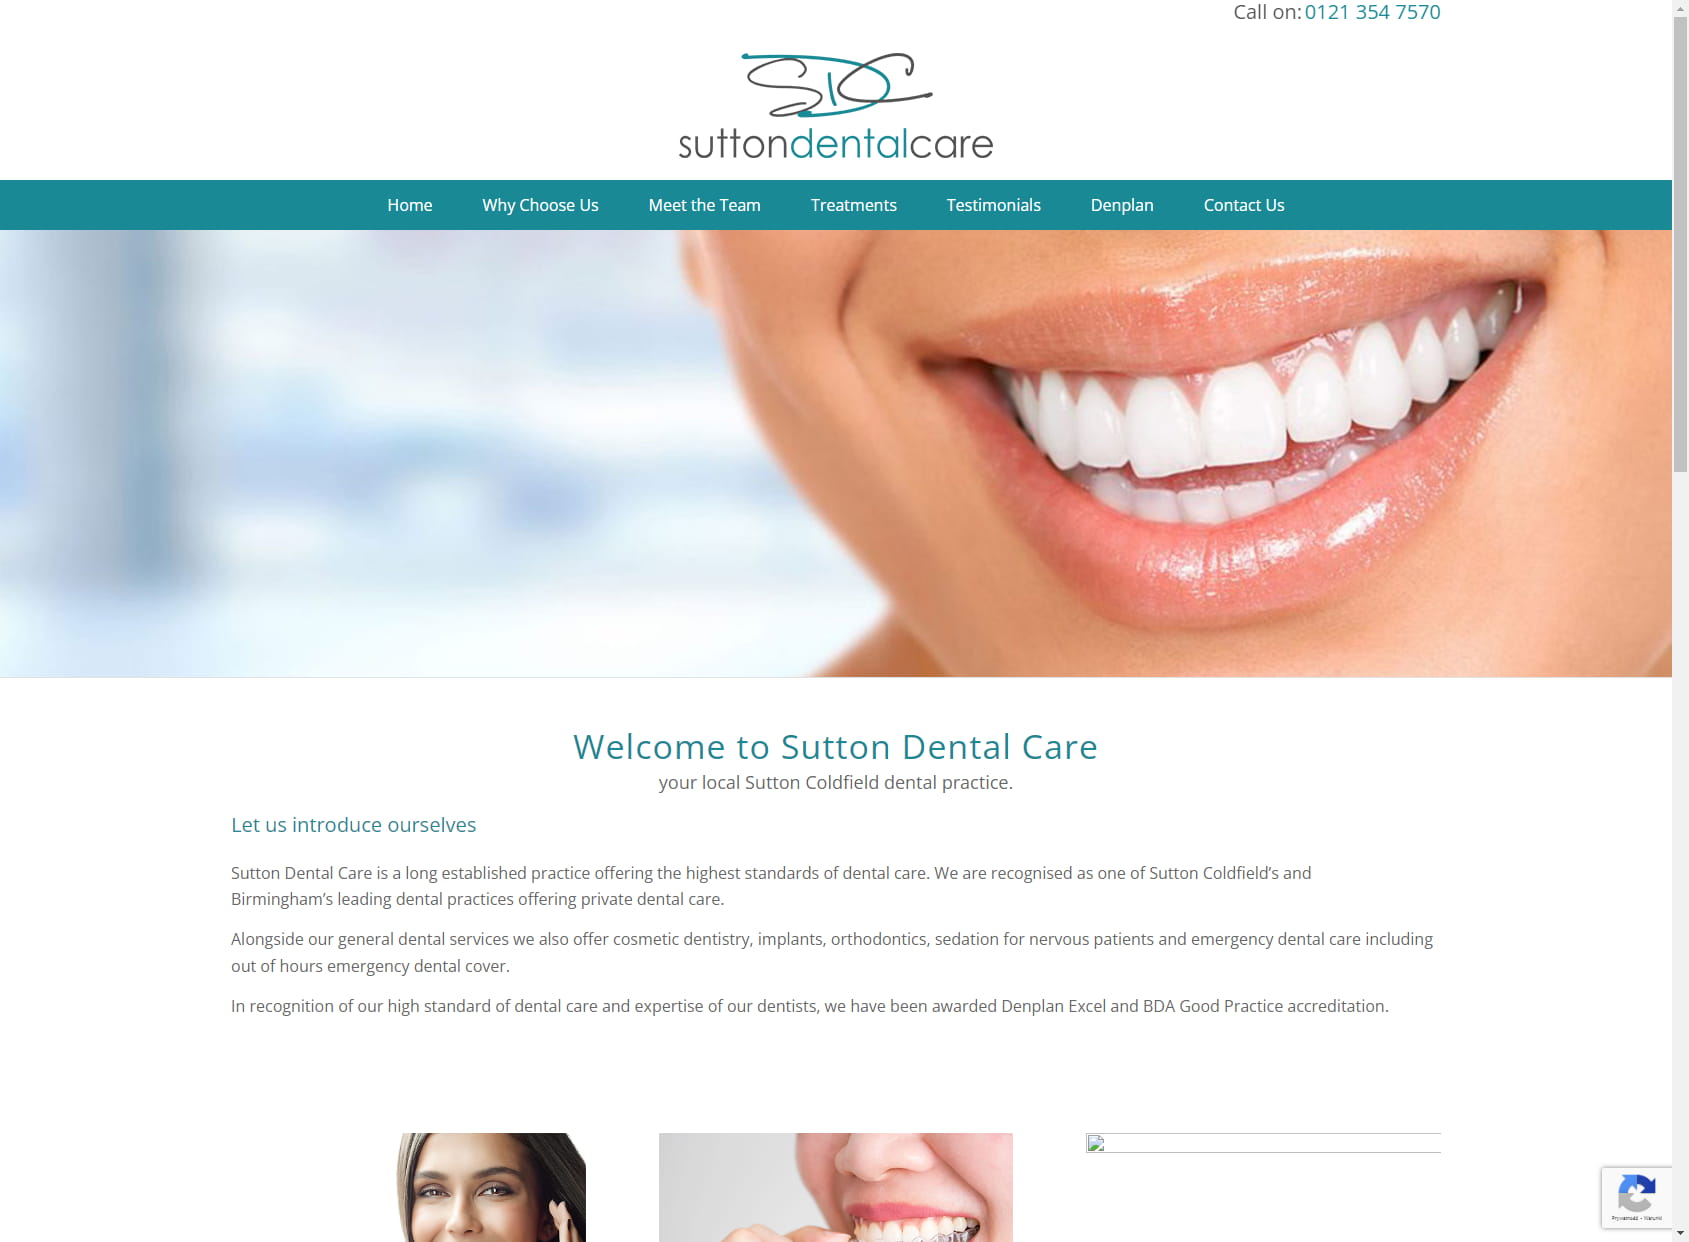 Sutton Dental Care